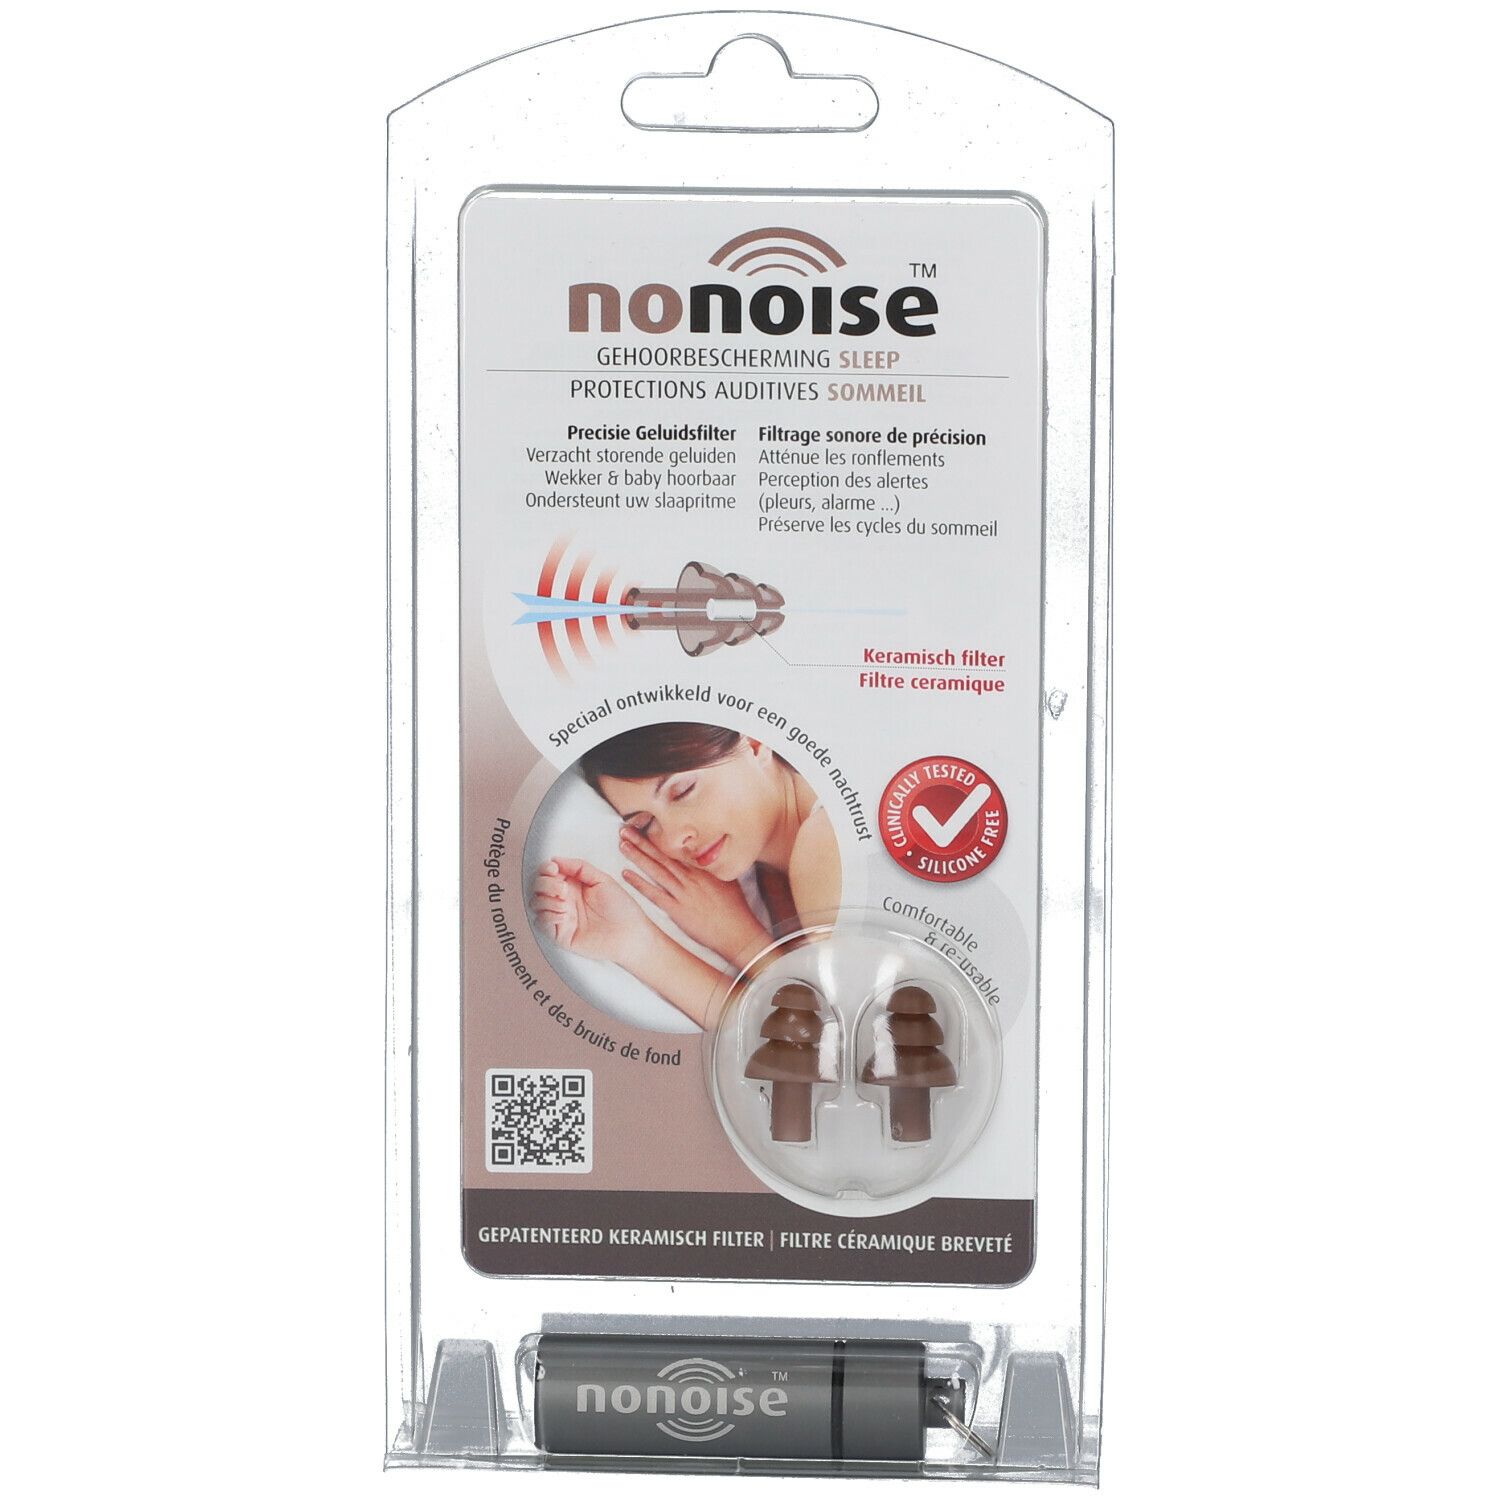 NoNoise™ Protection Auditive Sommeil